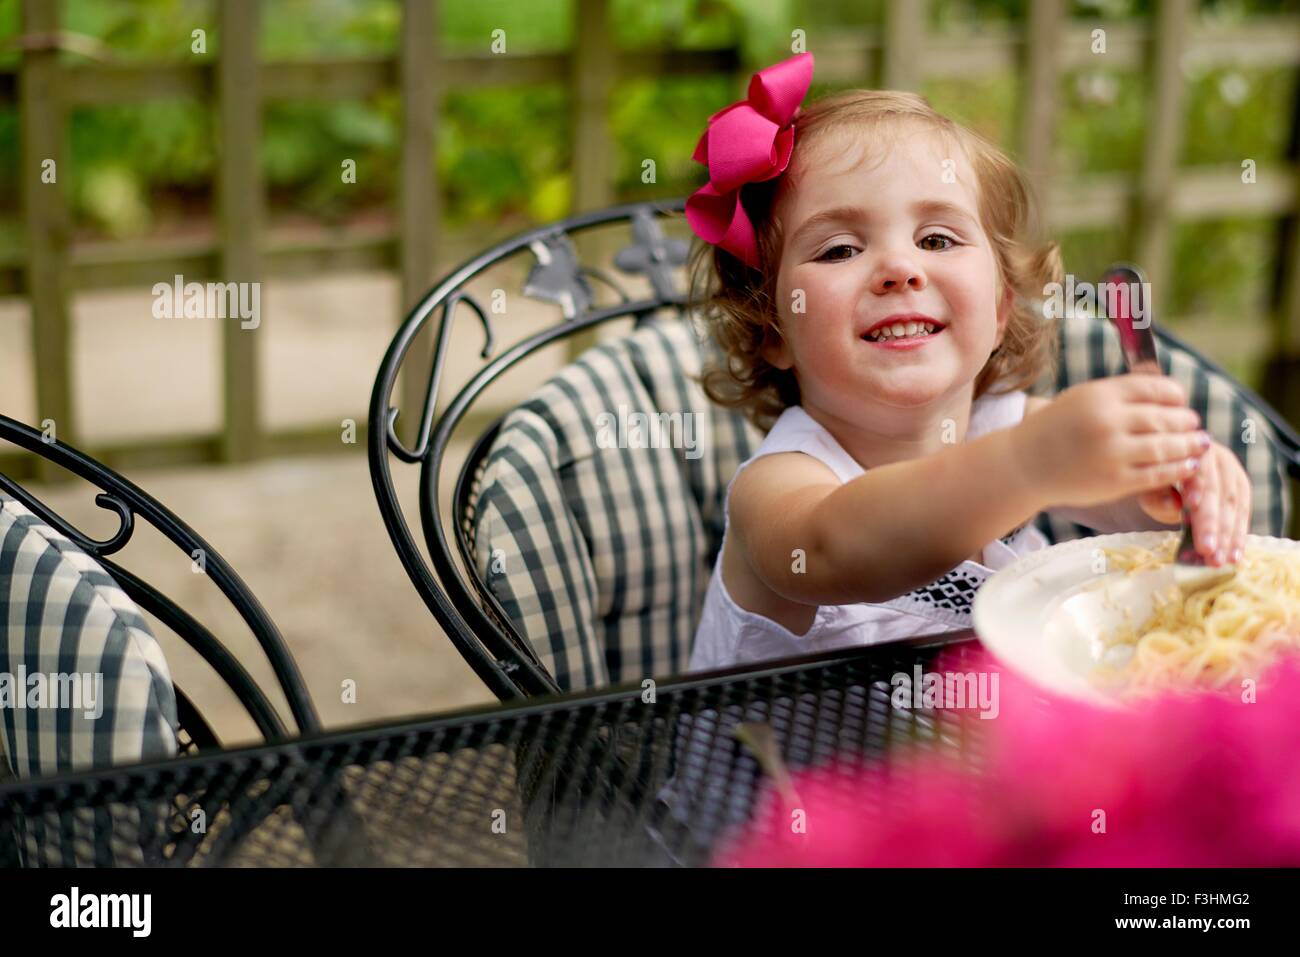 Girl dining at garden table looking at camera smiling Stock Photo